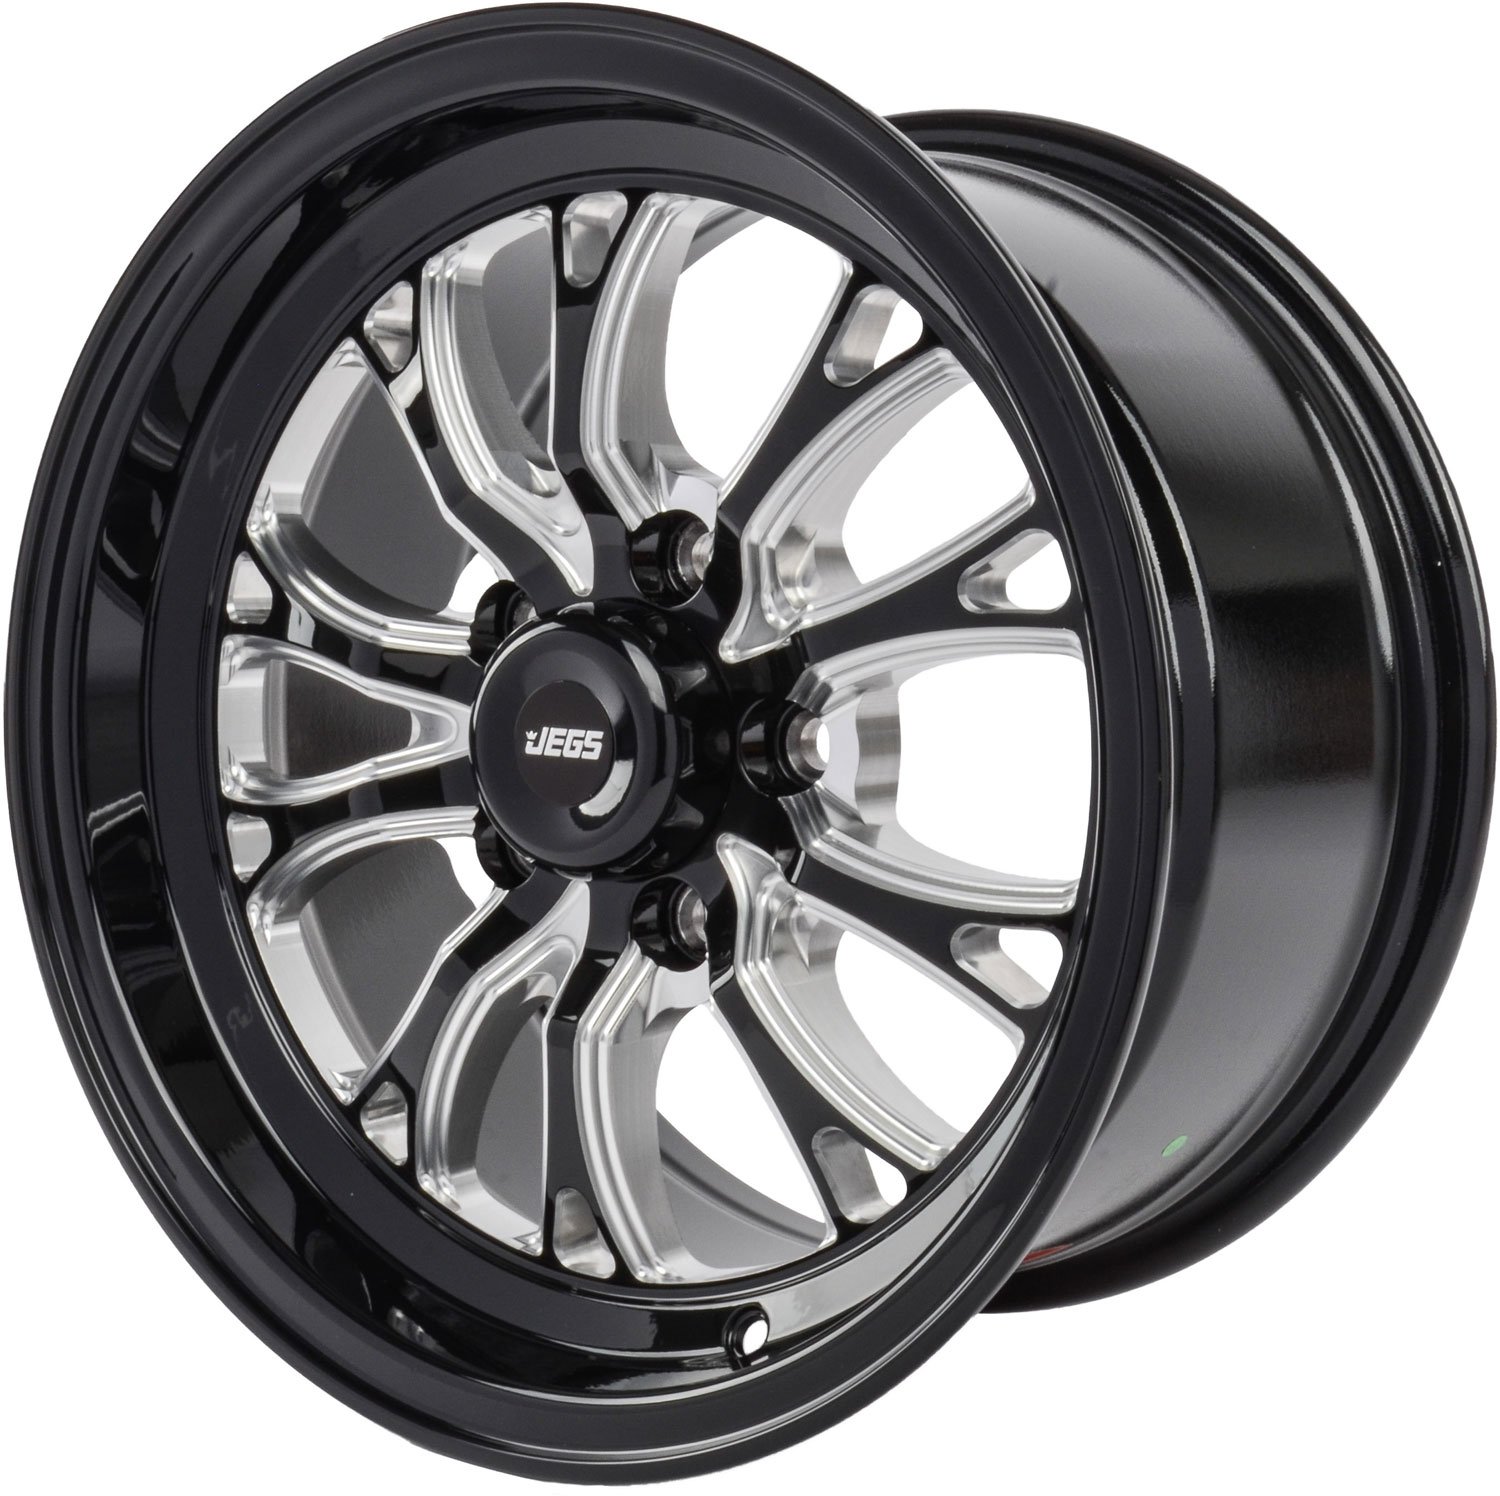 SSR Spike Wheel [Size: 15" x 8"] Gloss Black